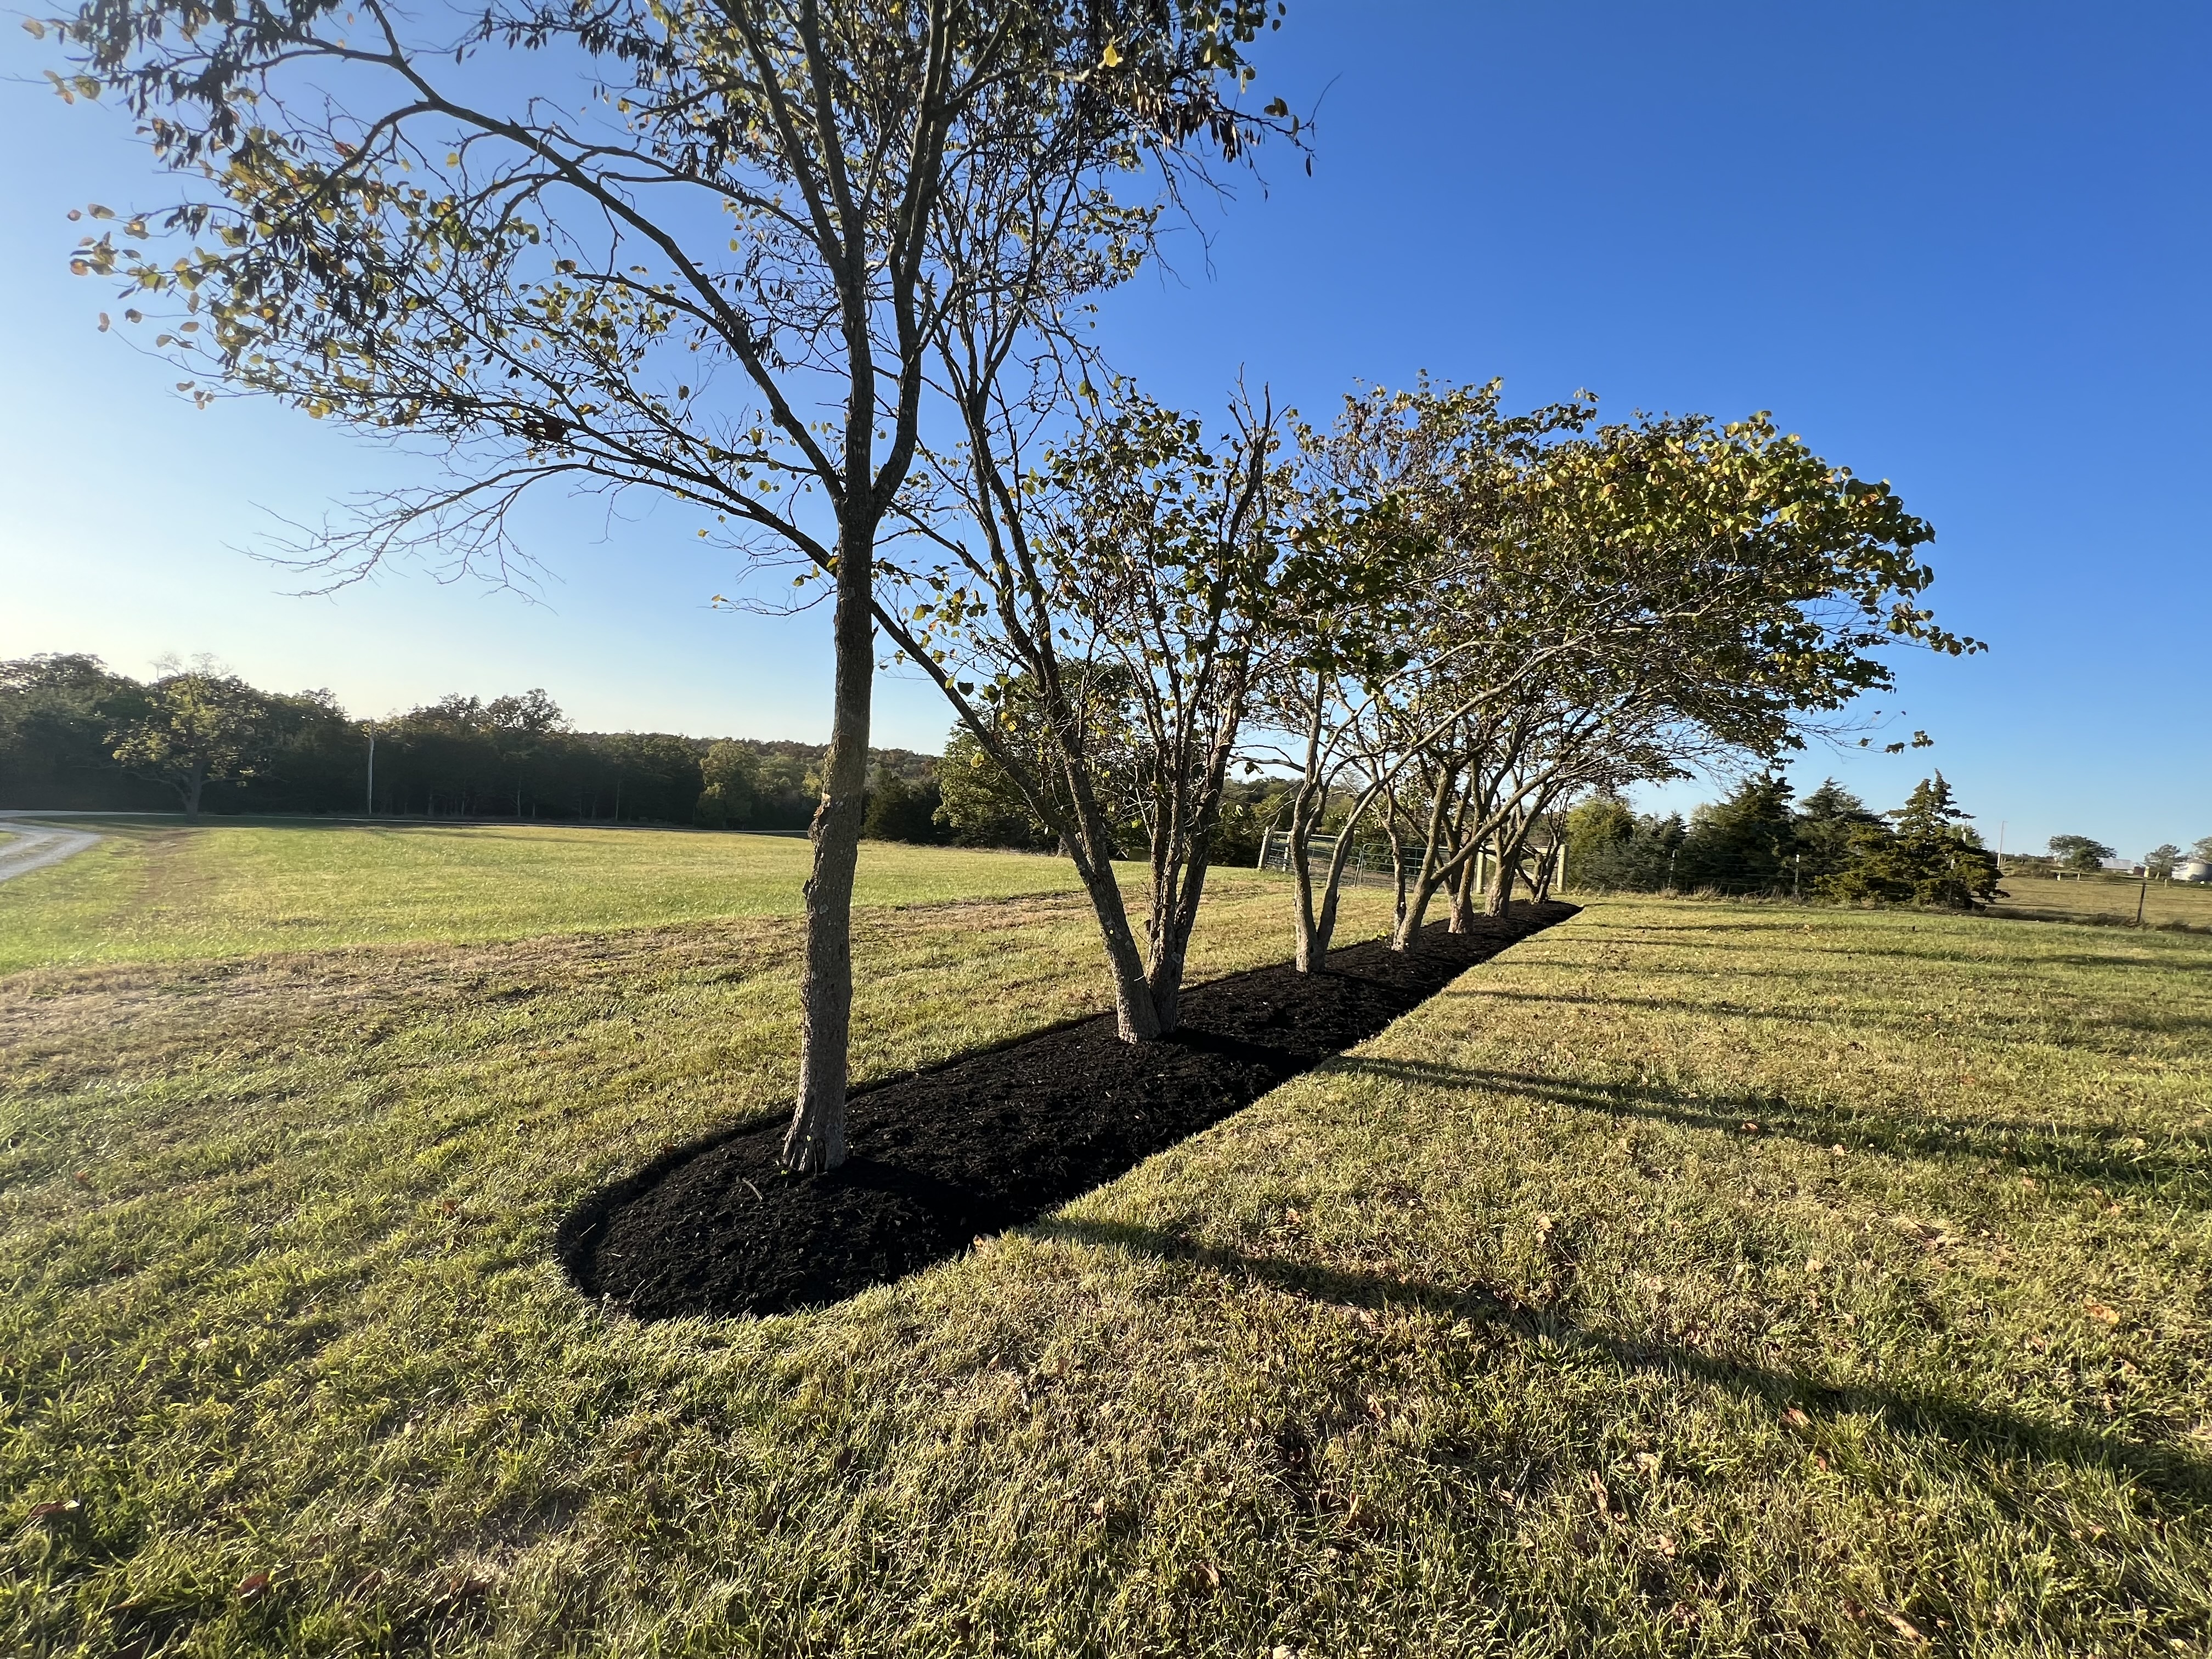 Professional Mulch Installation with Landscape Edging Services in Wentzville, MO